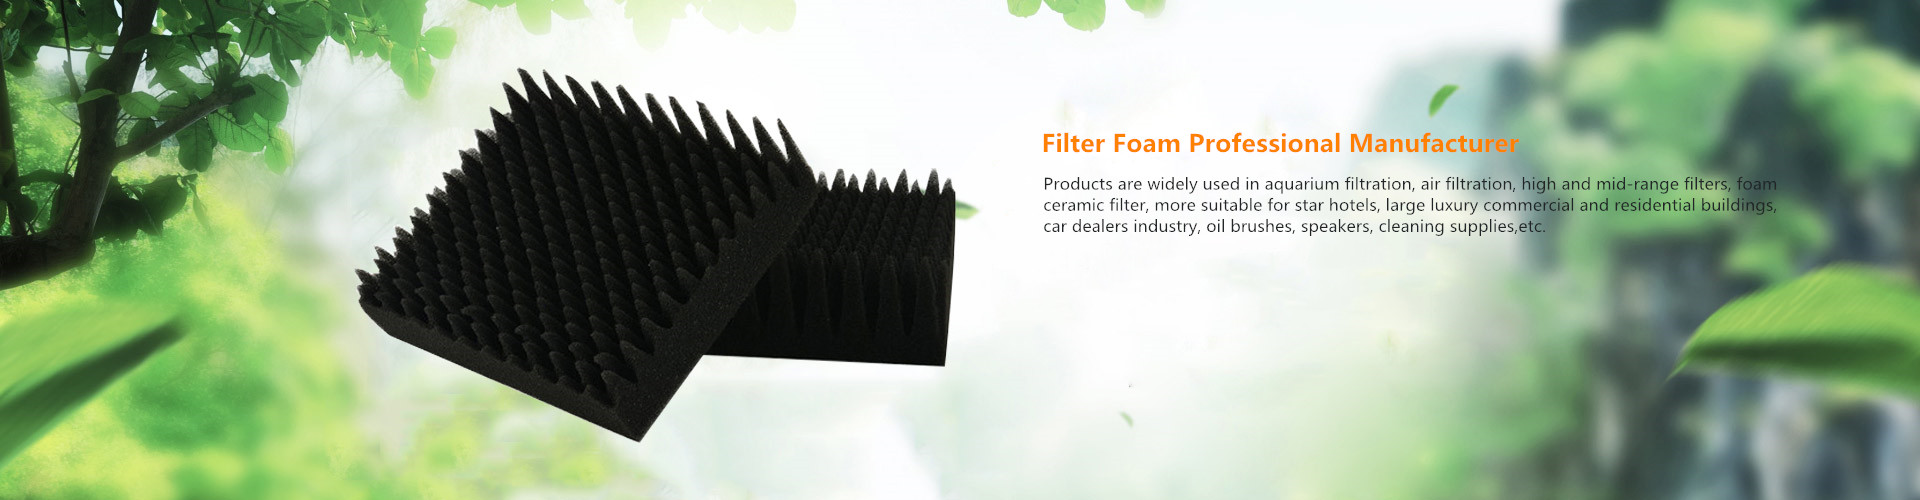 filter foam professional manufacturer